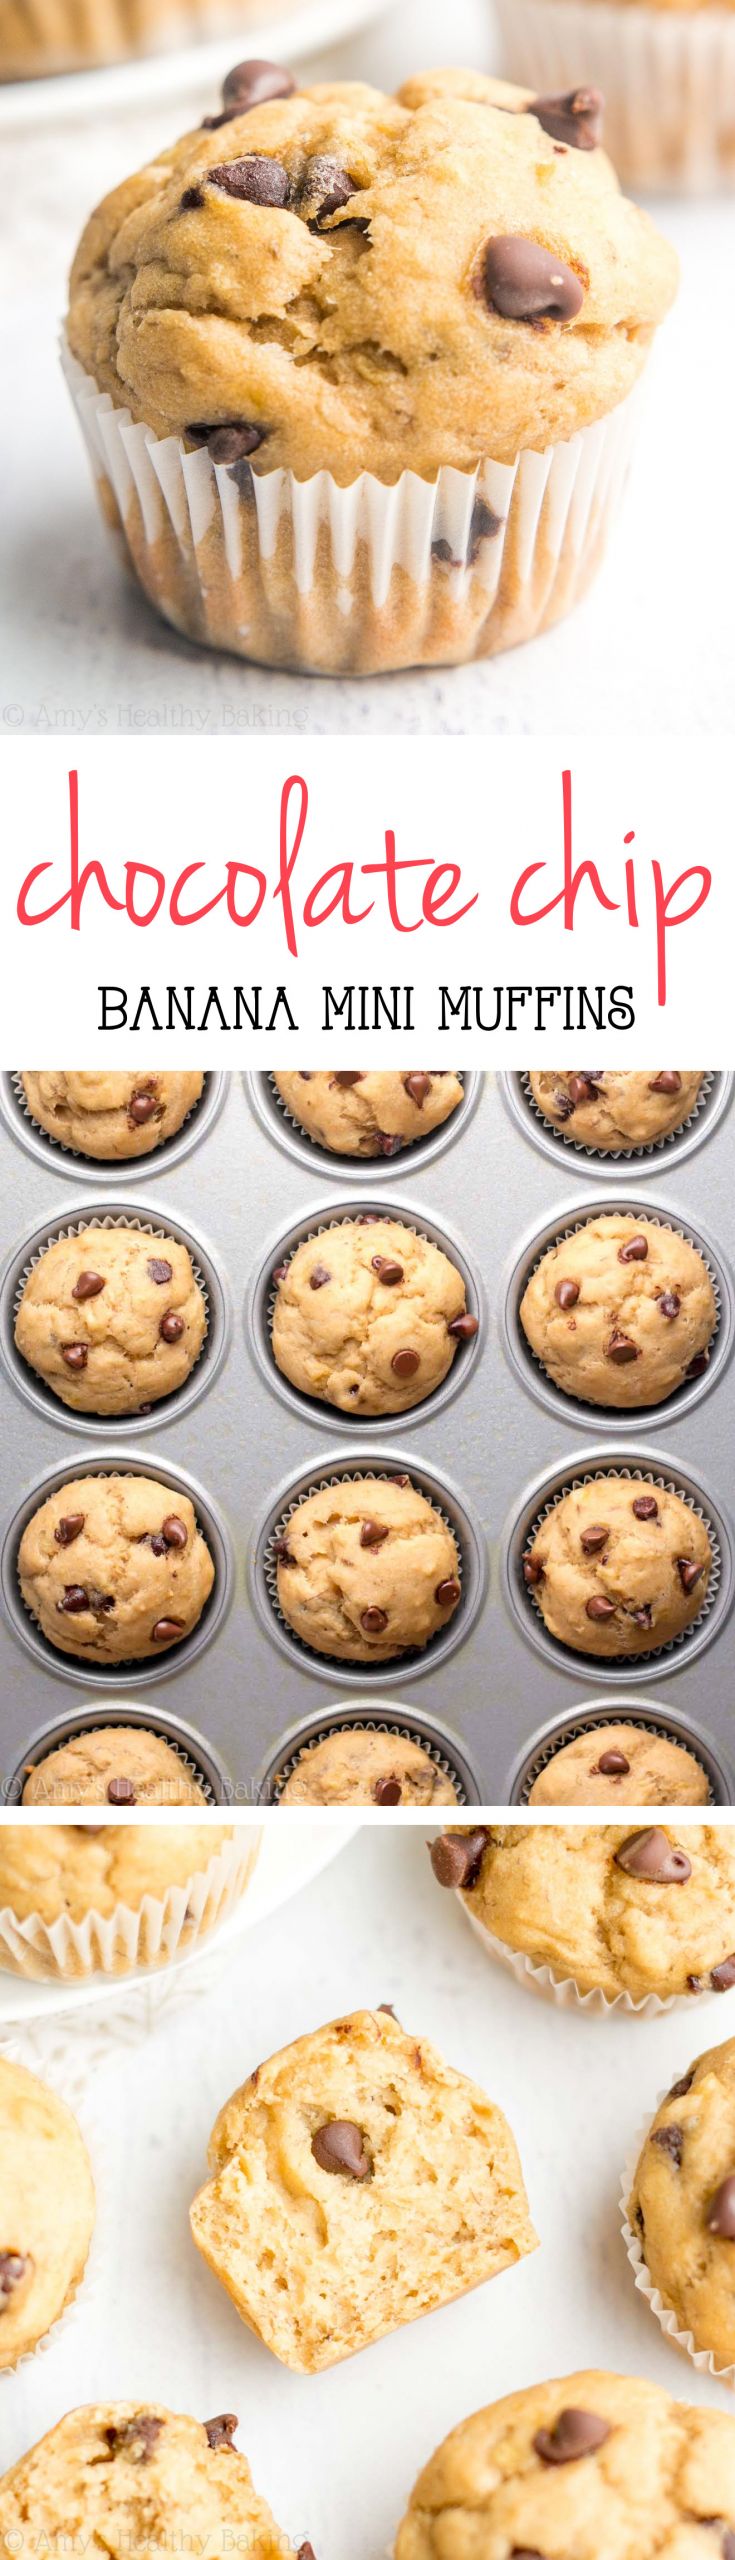 Low Calorie Chocolate Chip Muffins
 Chocolate Chip Banana Mini Muffins